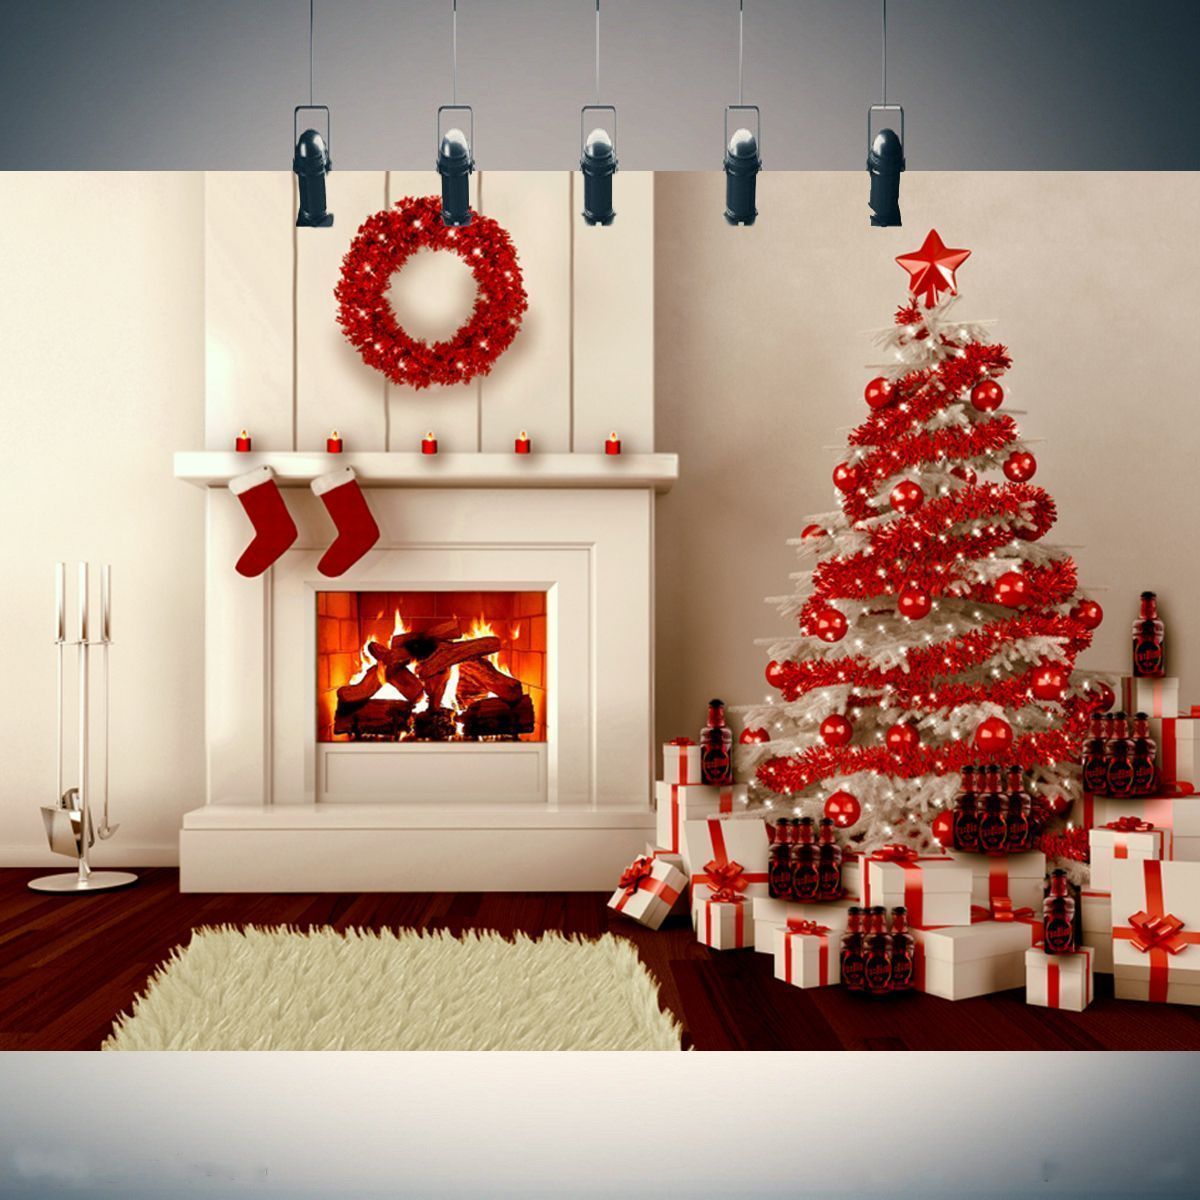 5x7ft-Vinyl-Christmas-Tree-Fireplace-Gifts-Stocking-Background-Photography-Studio-Backdrop-1217122